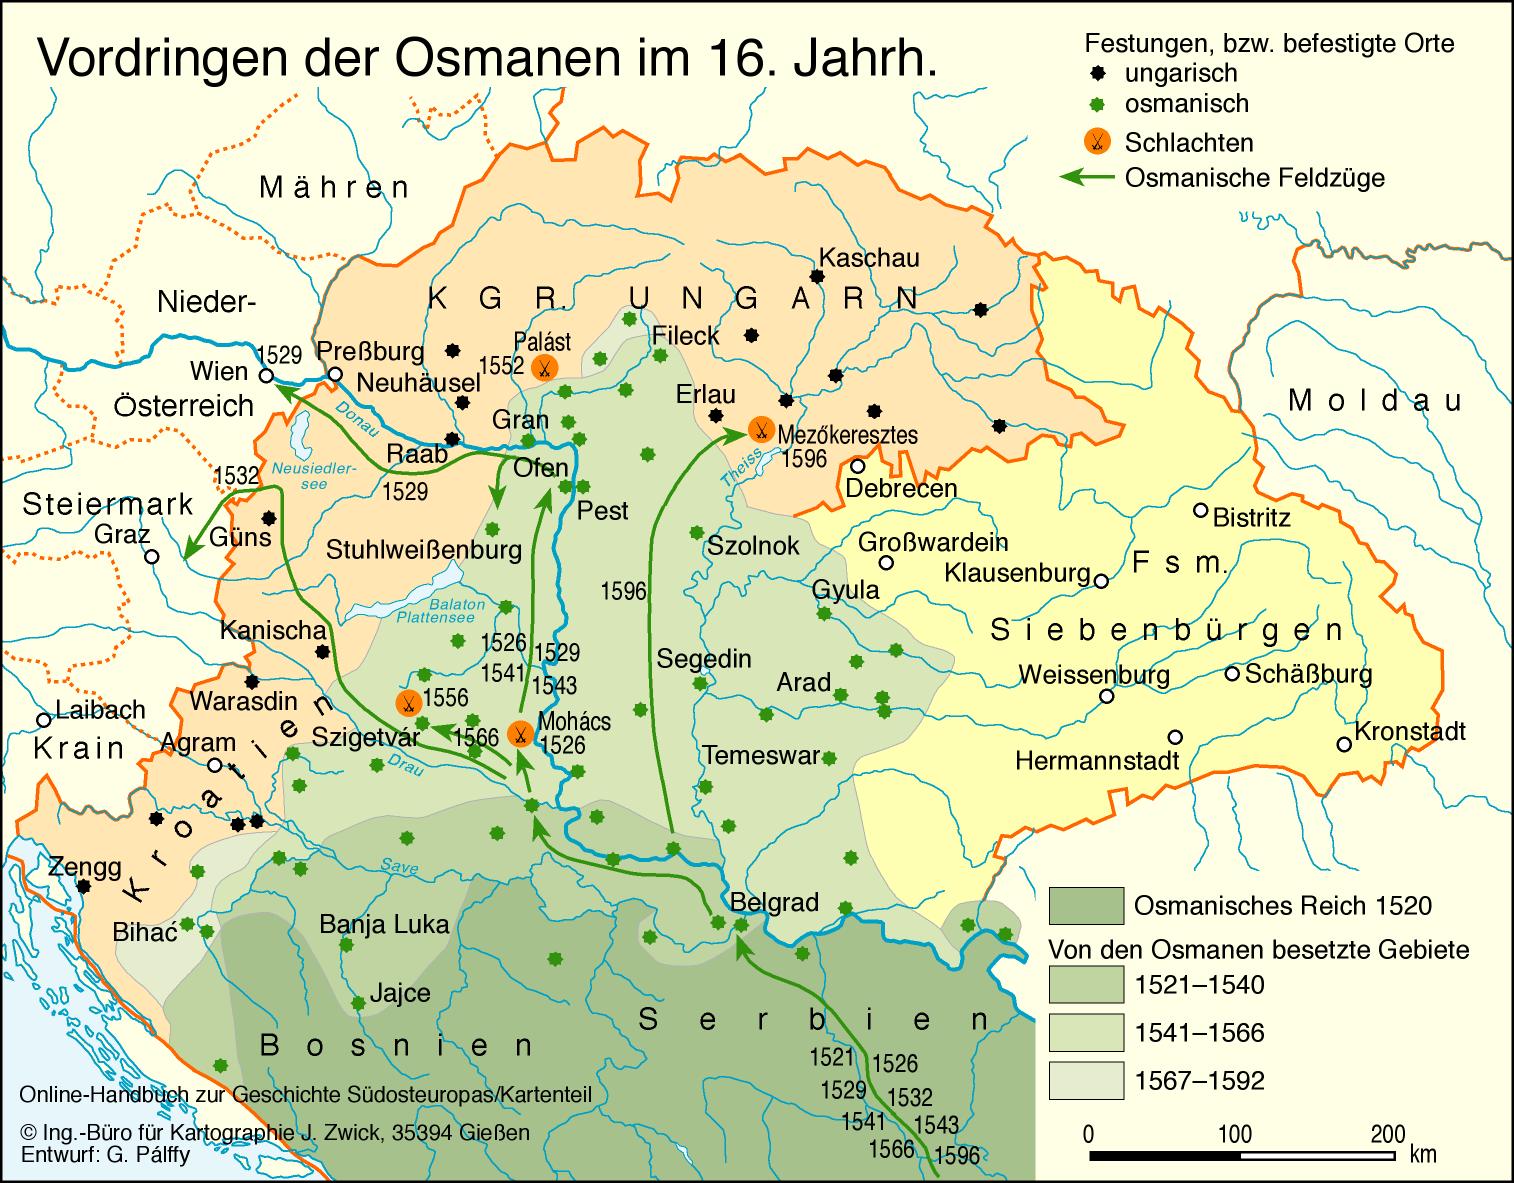 Vordringen der Osmanen im 16. Jahrhundert